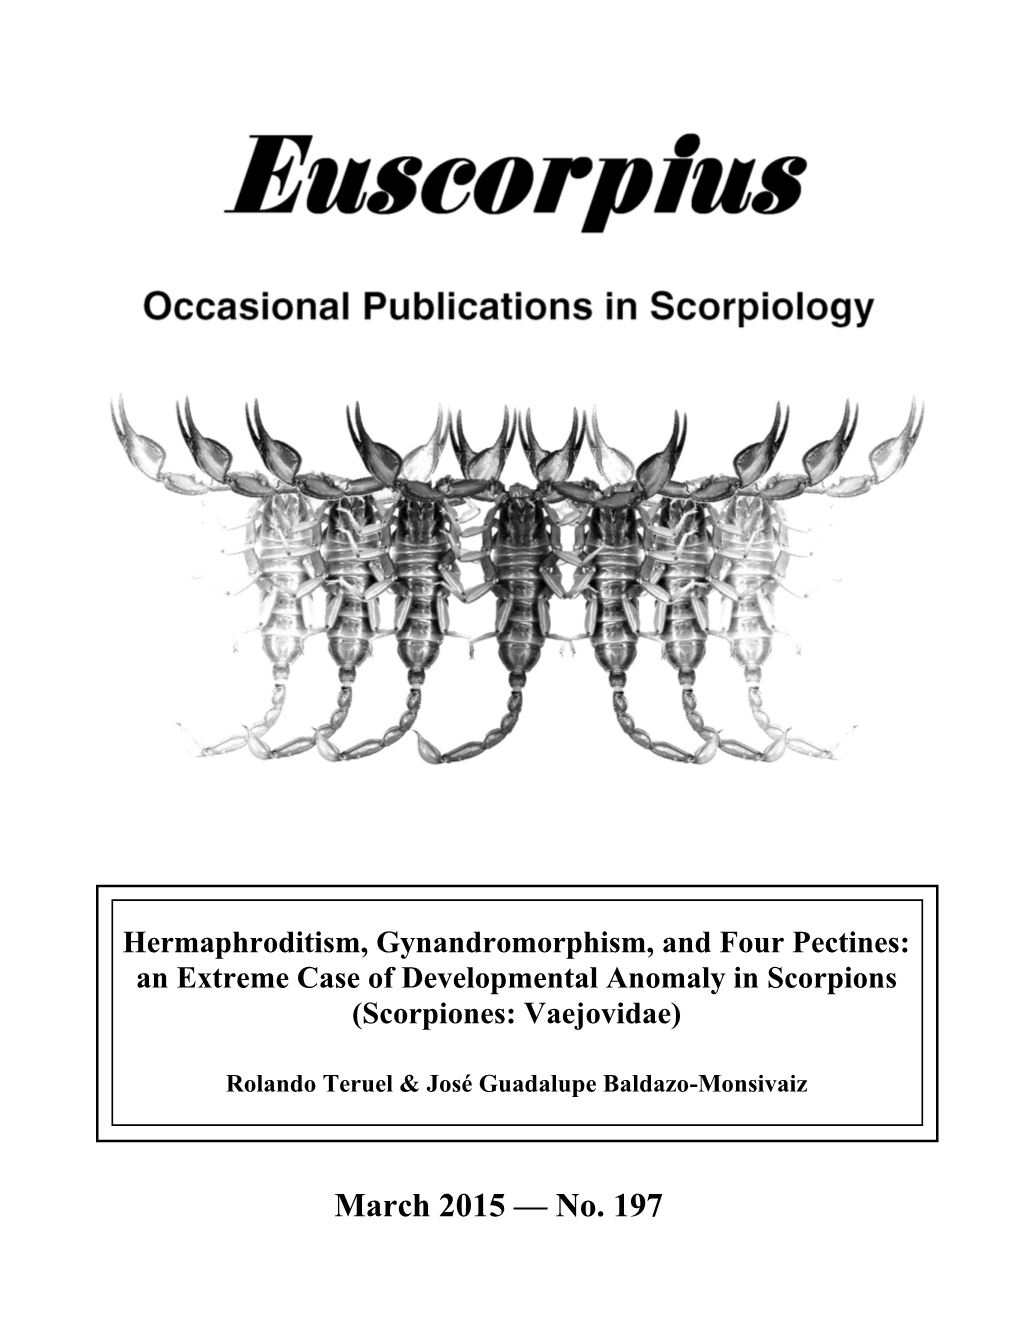 An Extreme Case of Developmental Anomaly in Scorpions (Scorpiones: Vaejovidae)